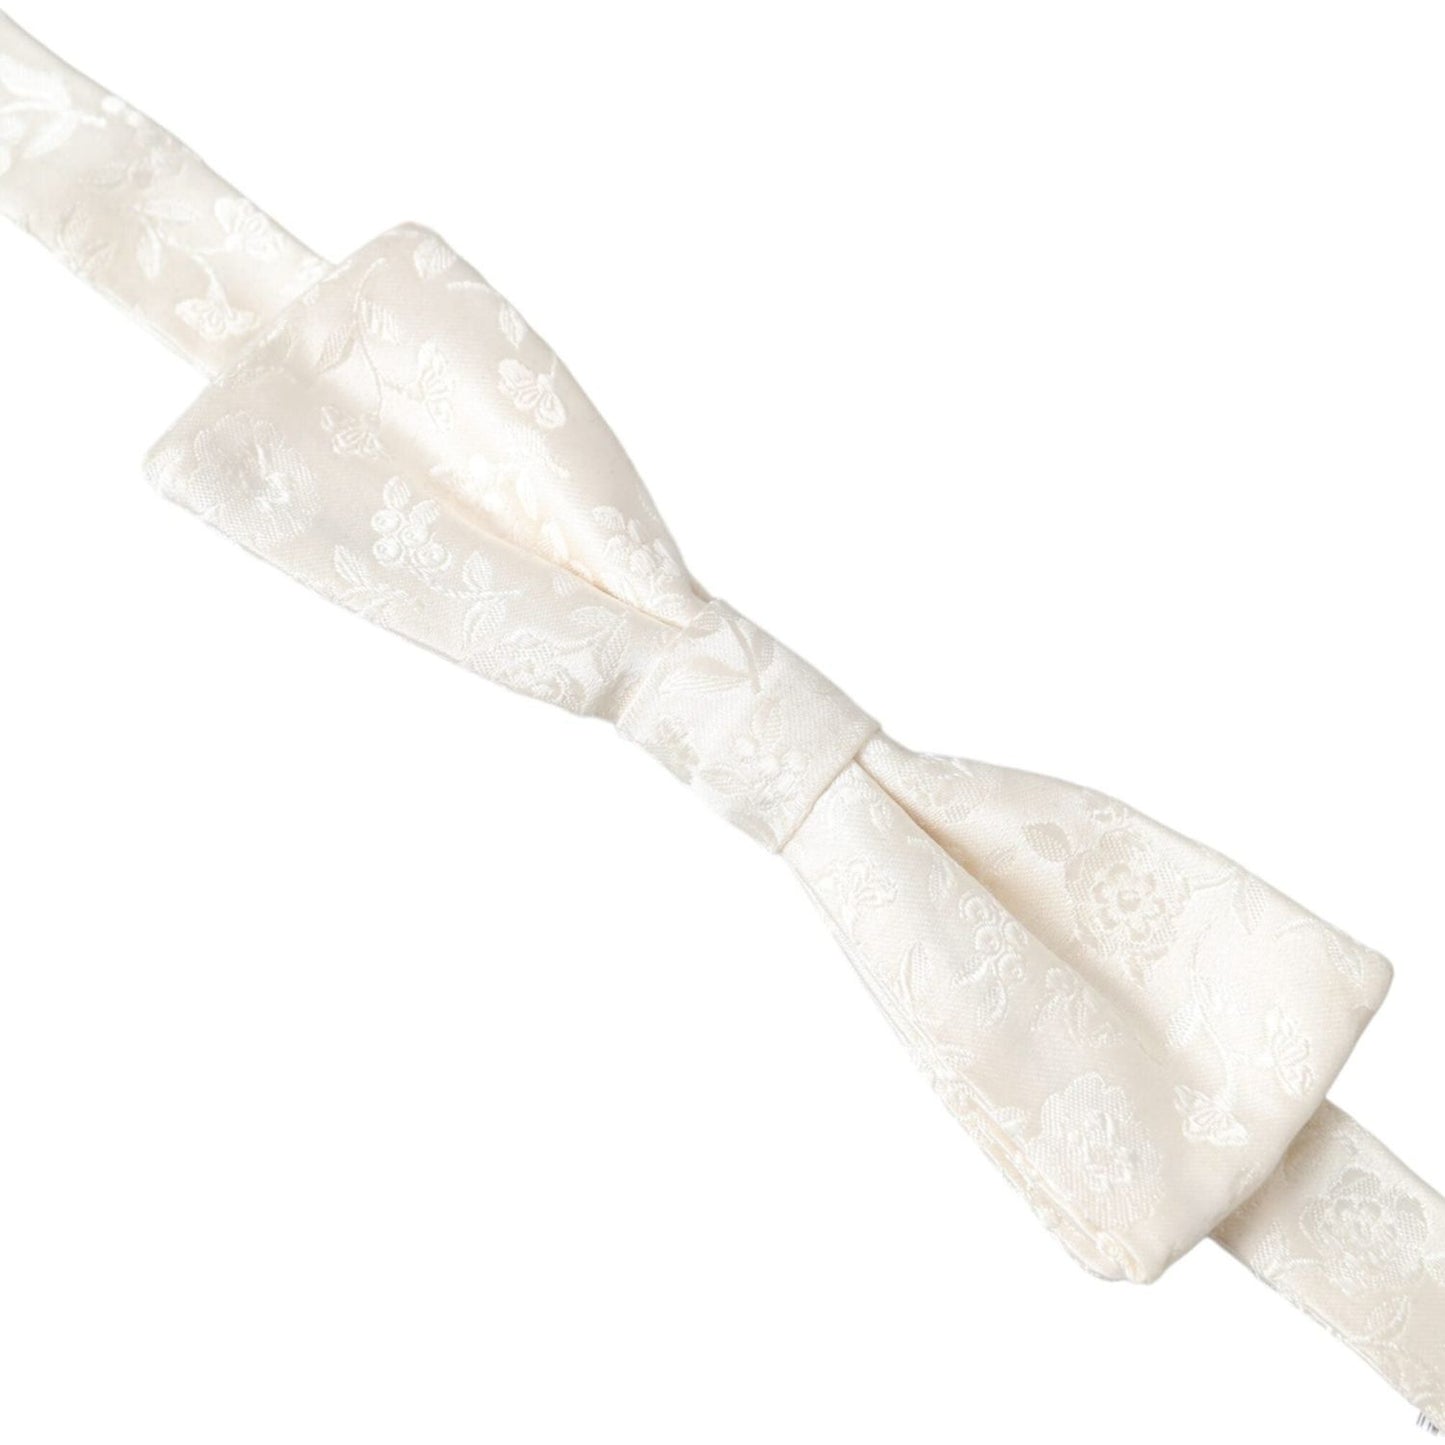 White Floral Silk Adjustable Neck Bow Tie